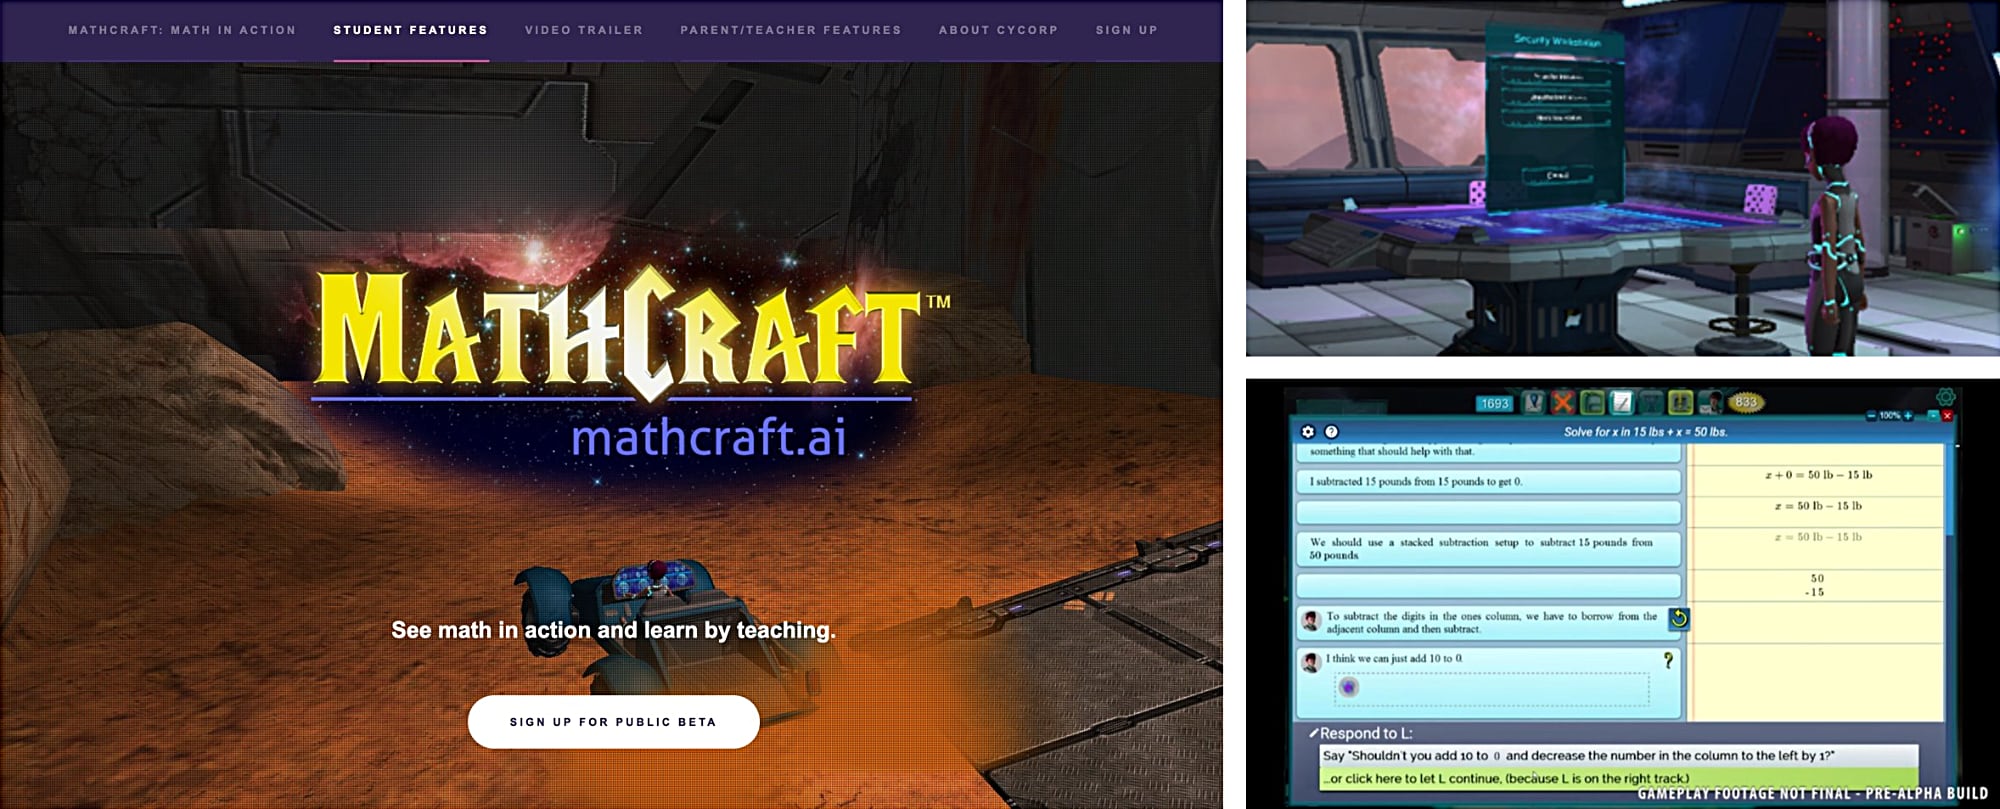 MathCraft website and game artwork